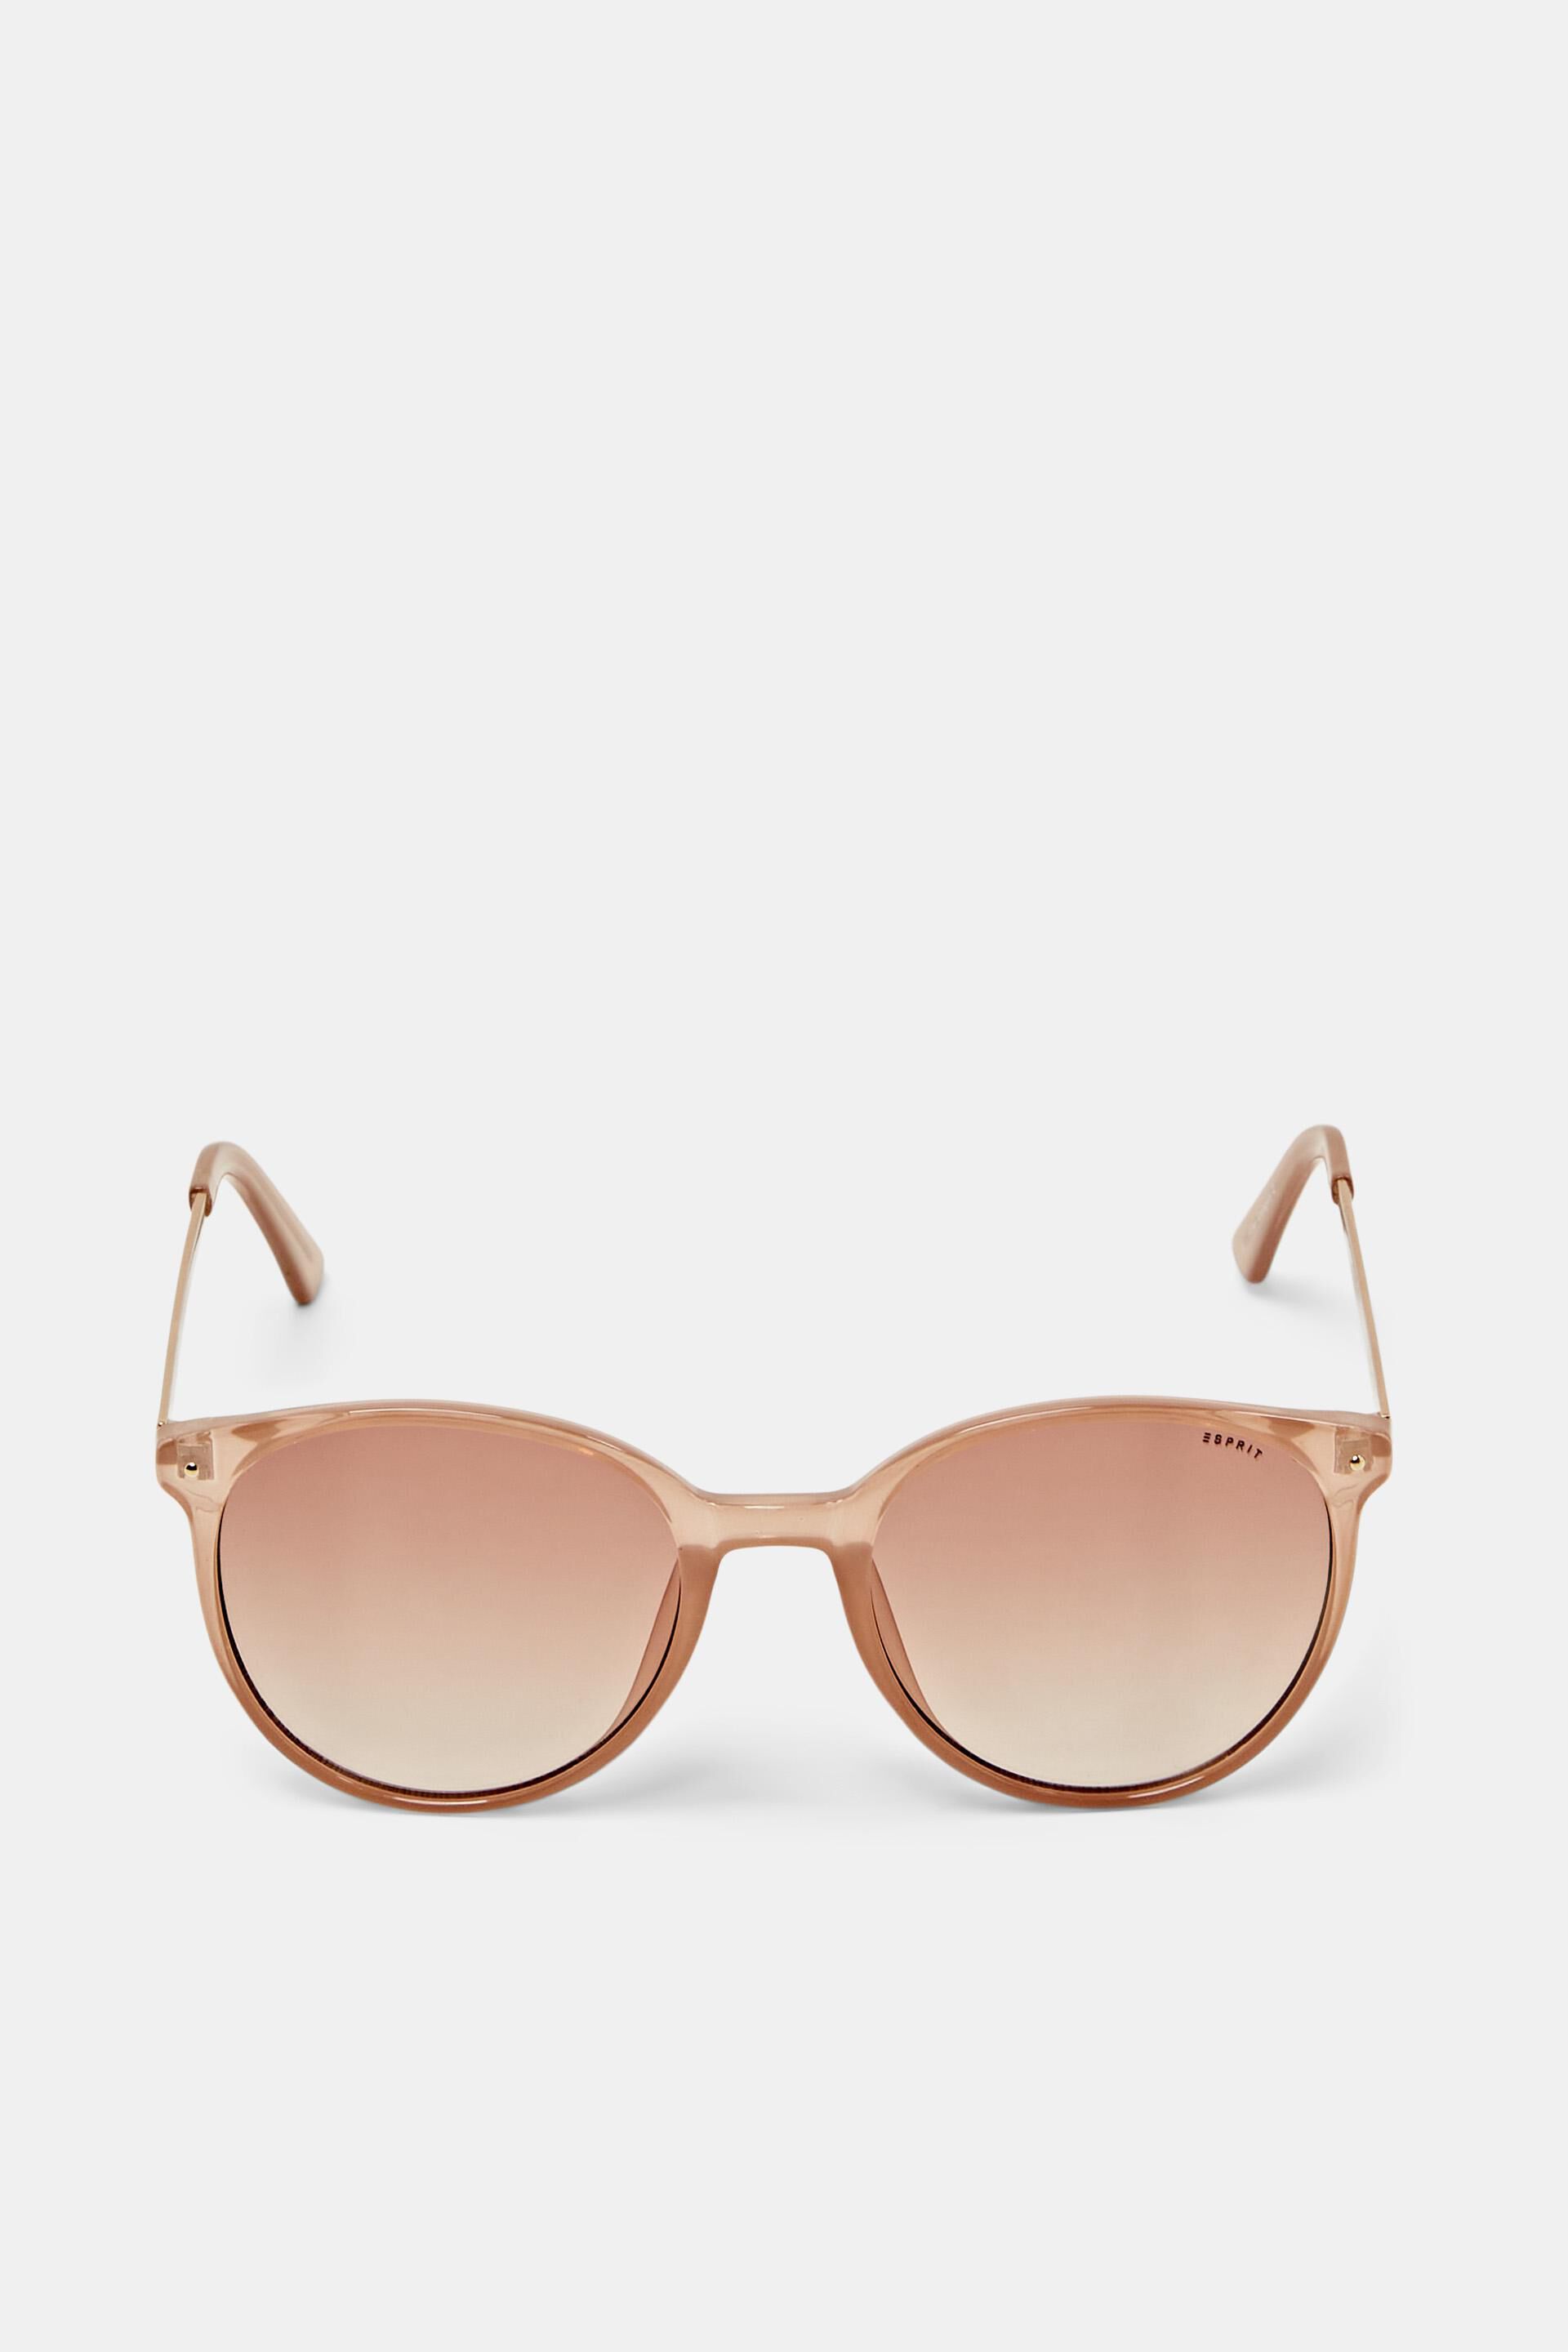 Esprit Round framed sunglasses